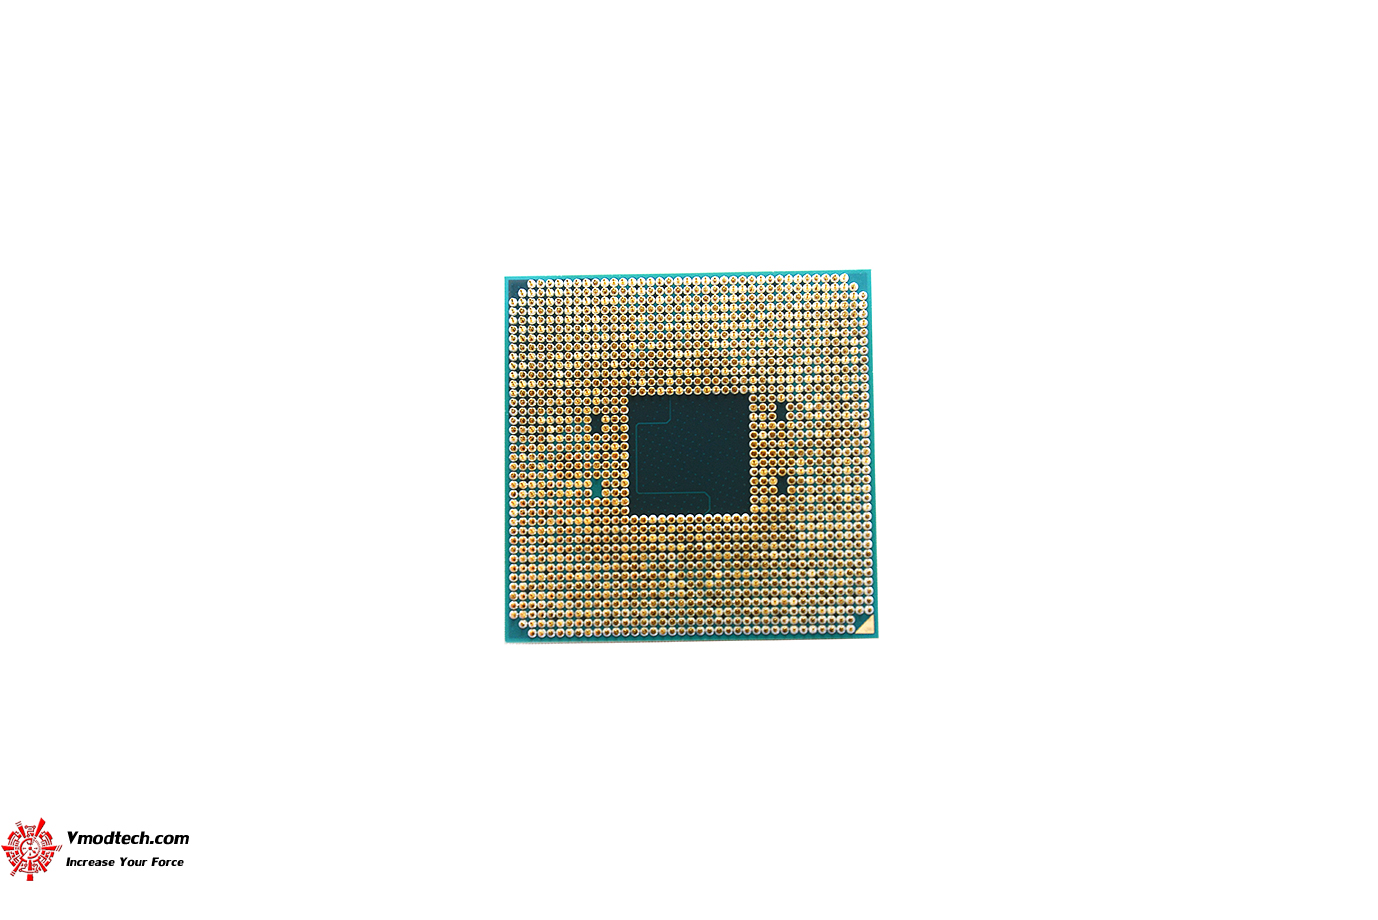 dsc 0786 AMD Athlon 200GE Processor with Radeon Vega 3 Graphics Review